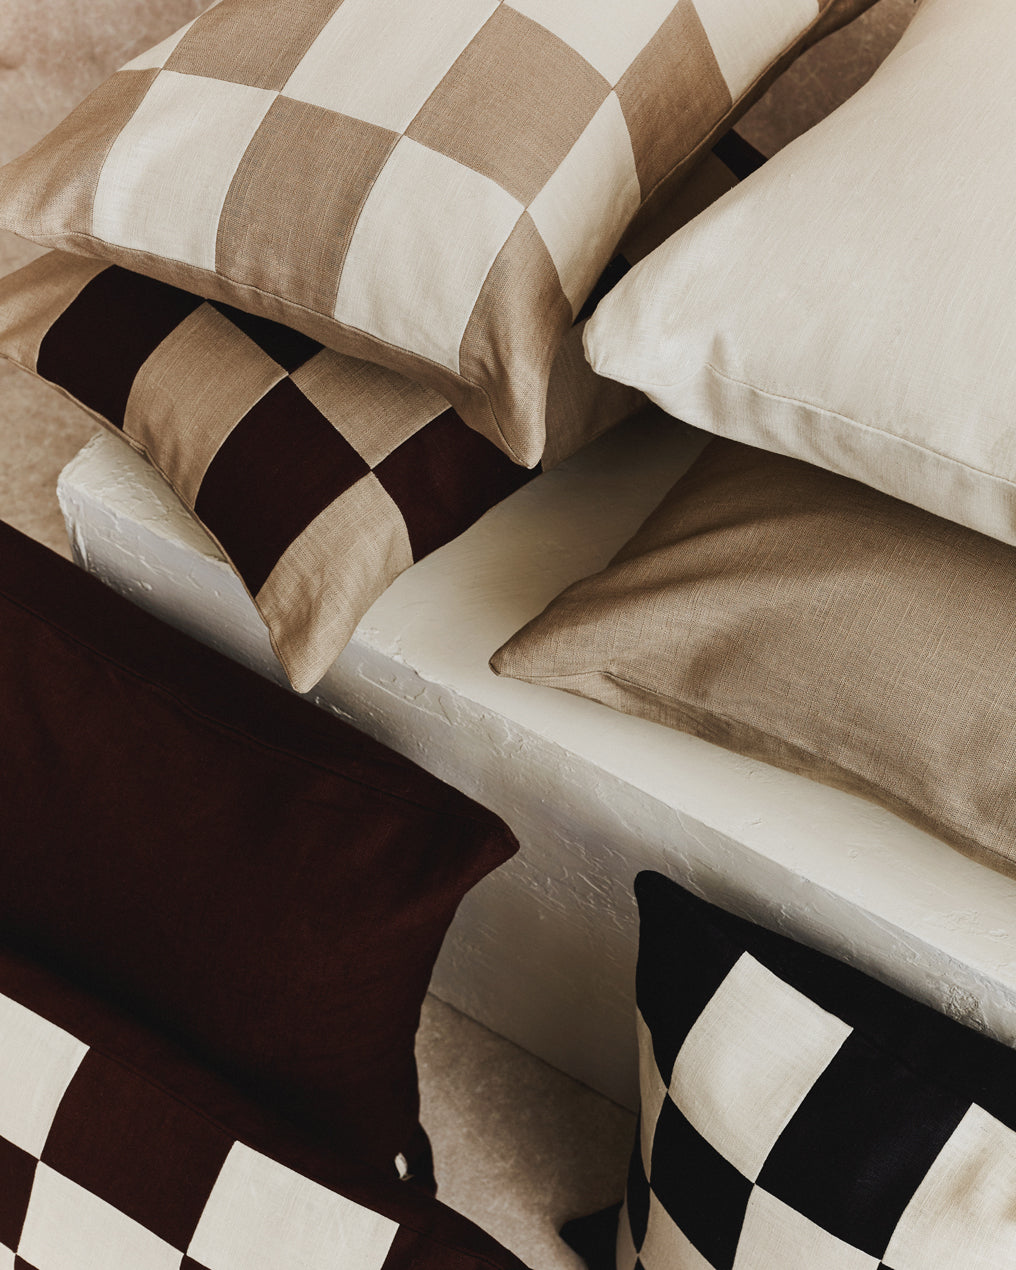 Chequered Rectangle Cushion Cover | Espresso and Ecru